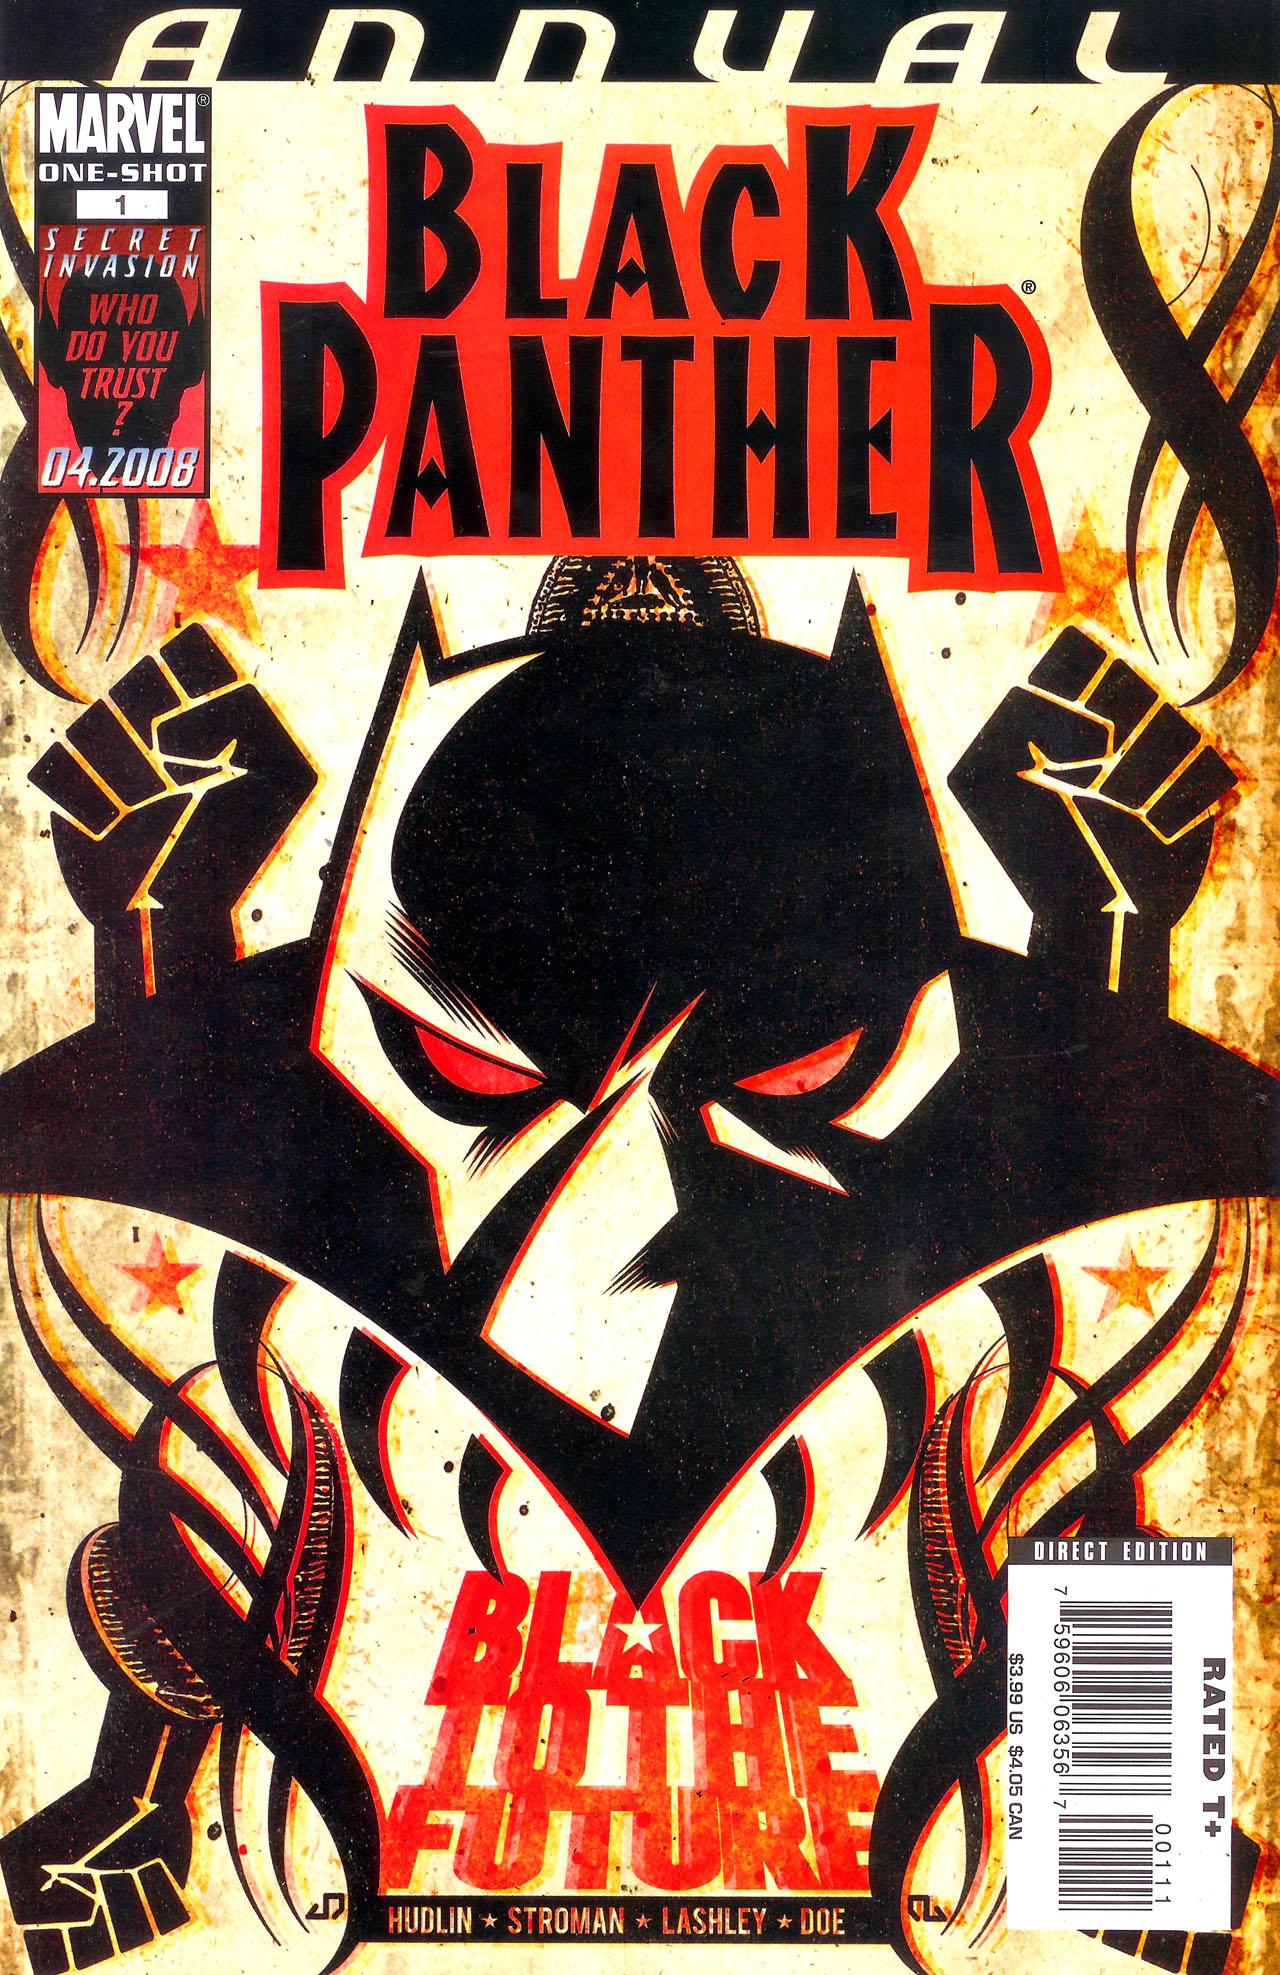 Black Panther Vol. 1 #1